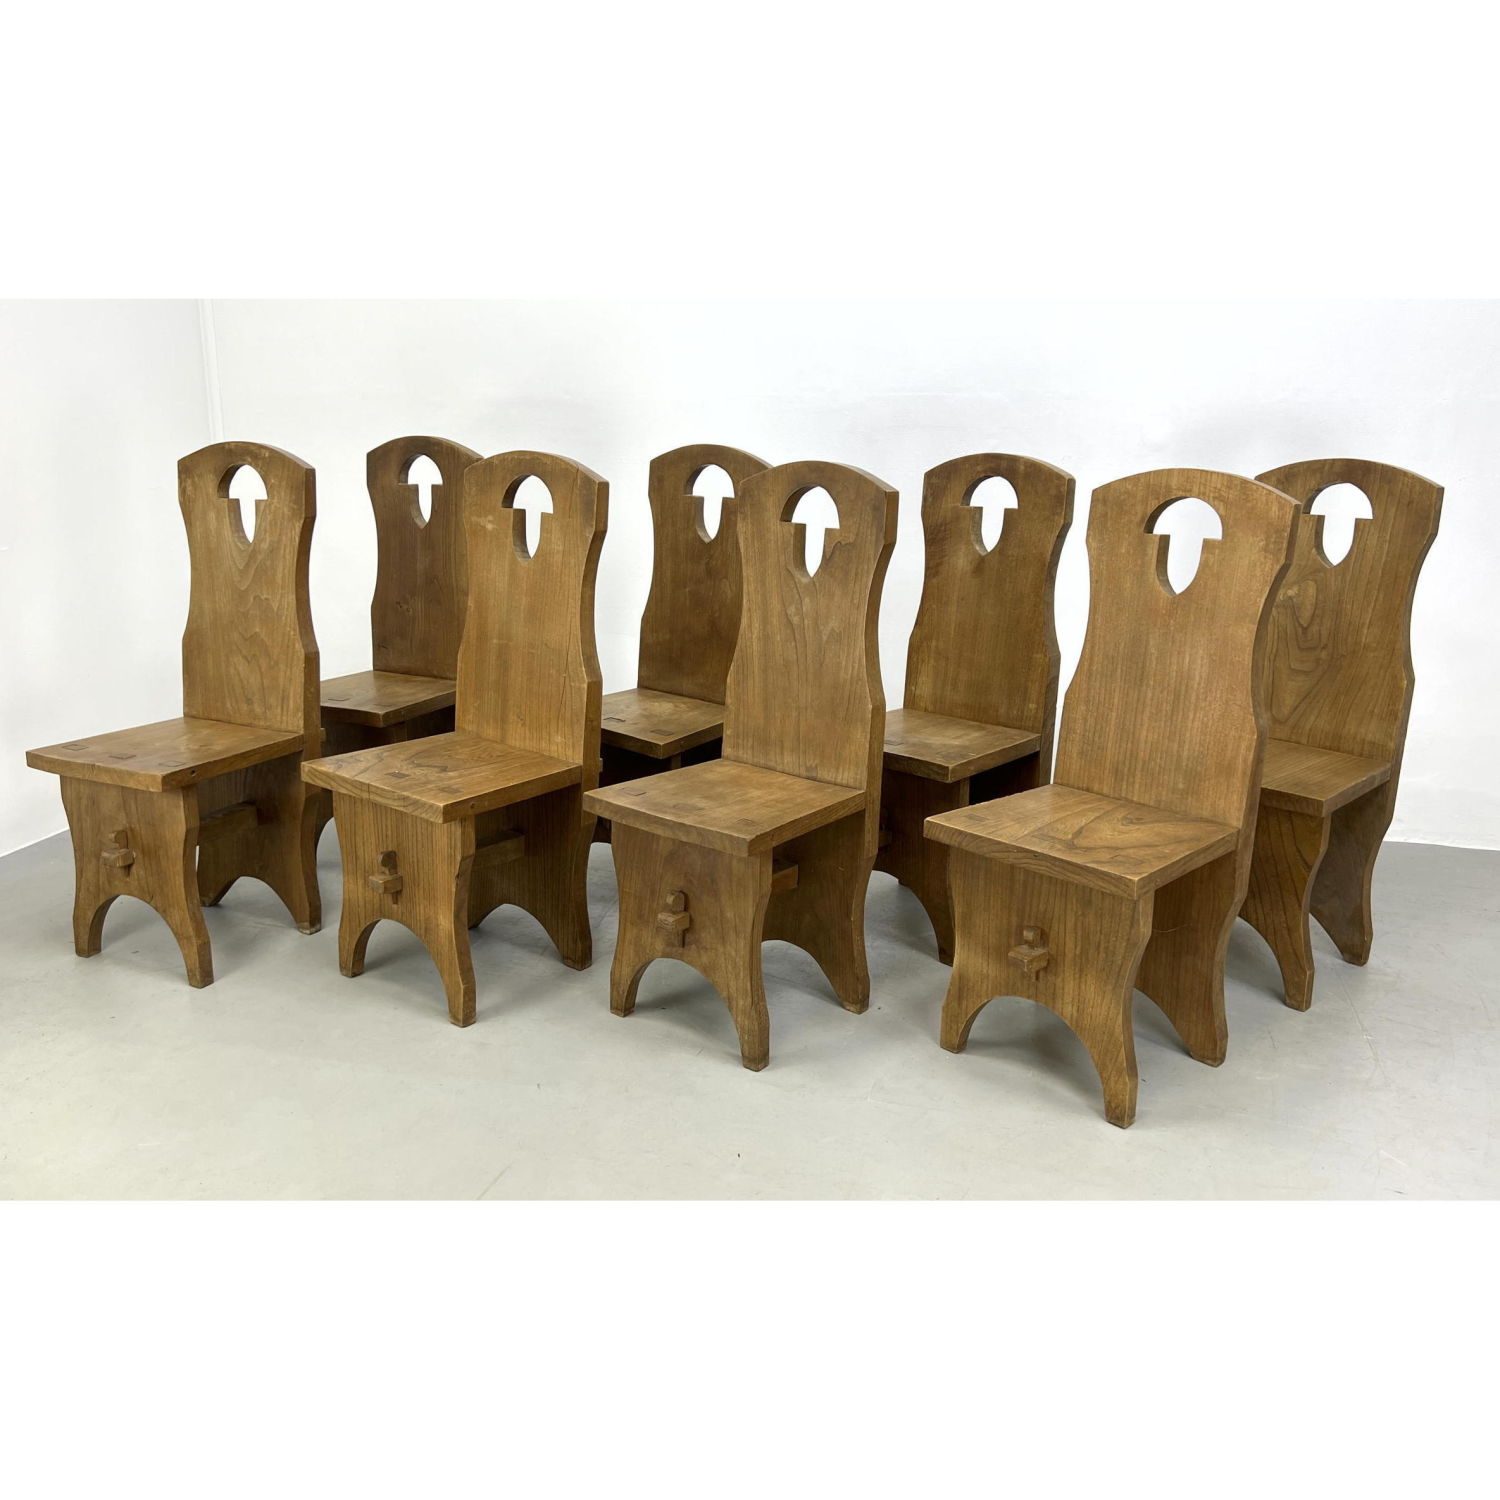 Set 8 Rustic French Brutalist Chairs 2b9db3